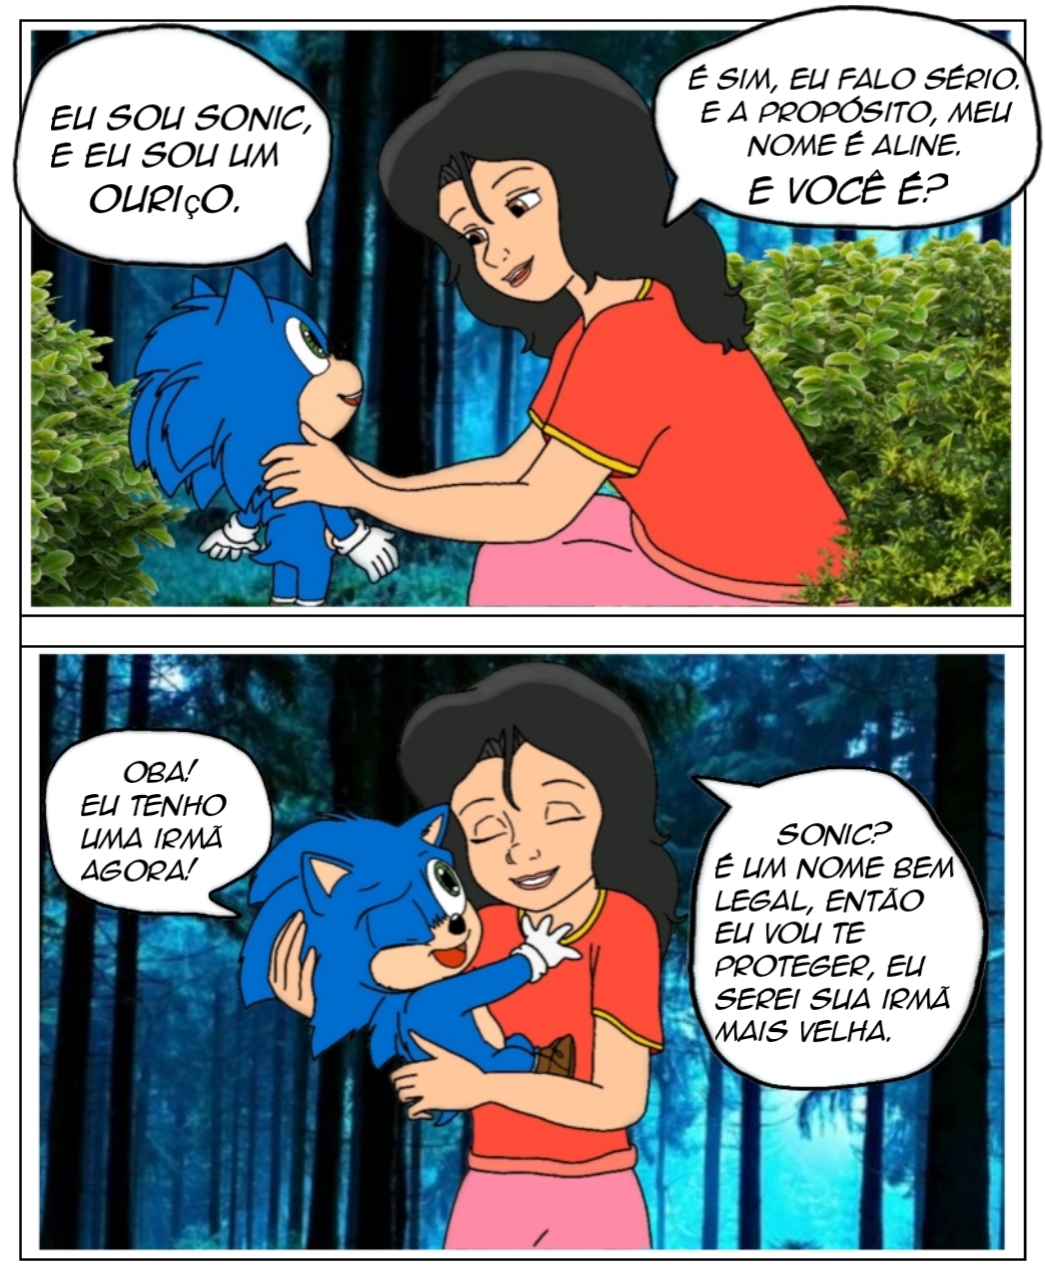 Sonic o Filme: Irmaos Adotivos pagina 3 by ALIX2002 on DeviantArt